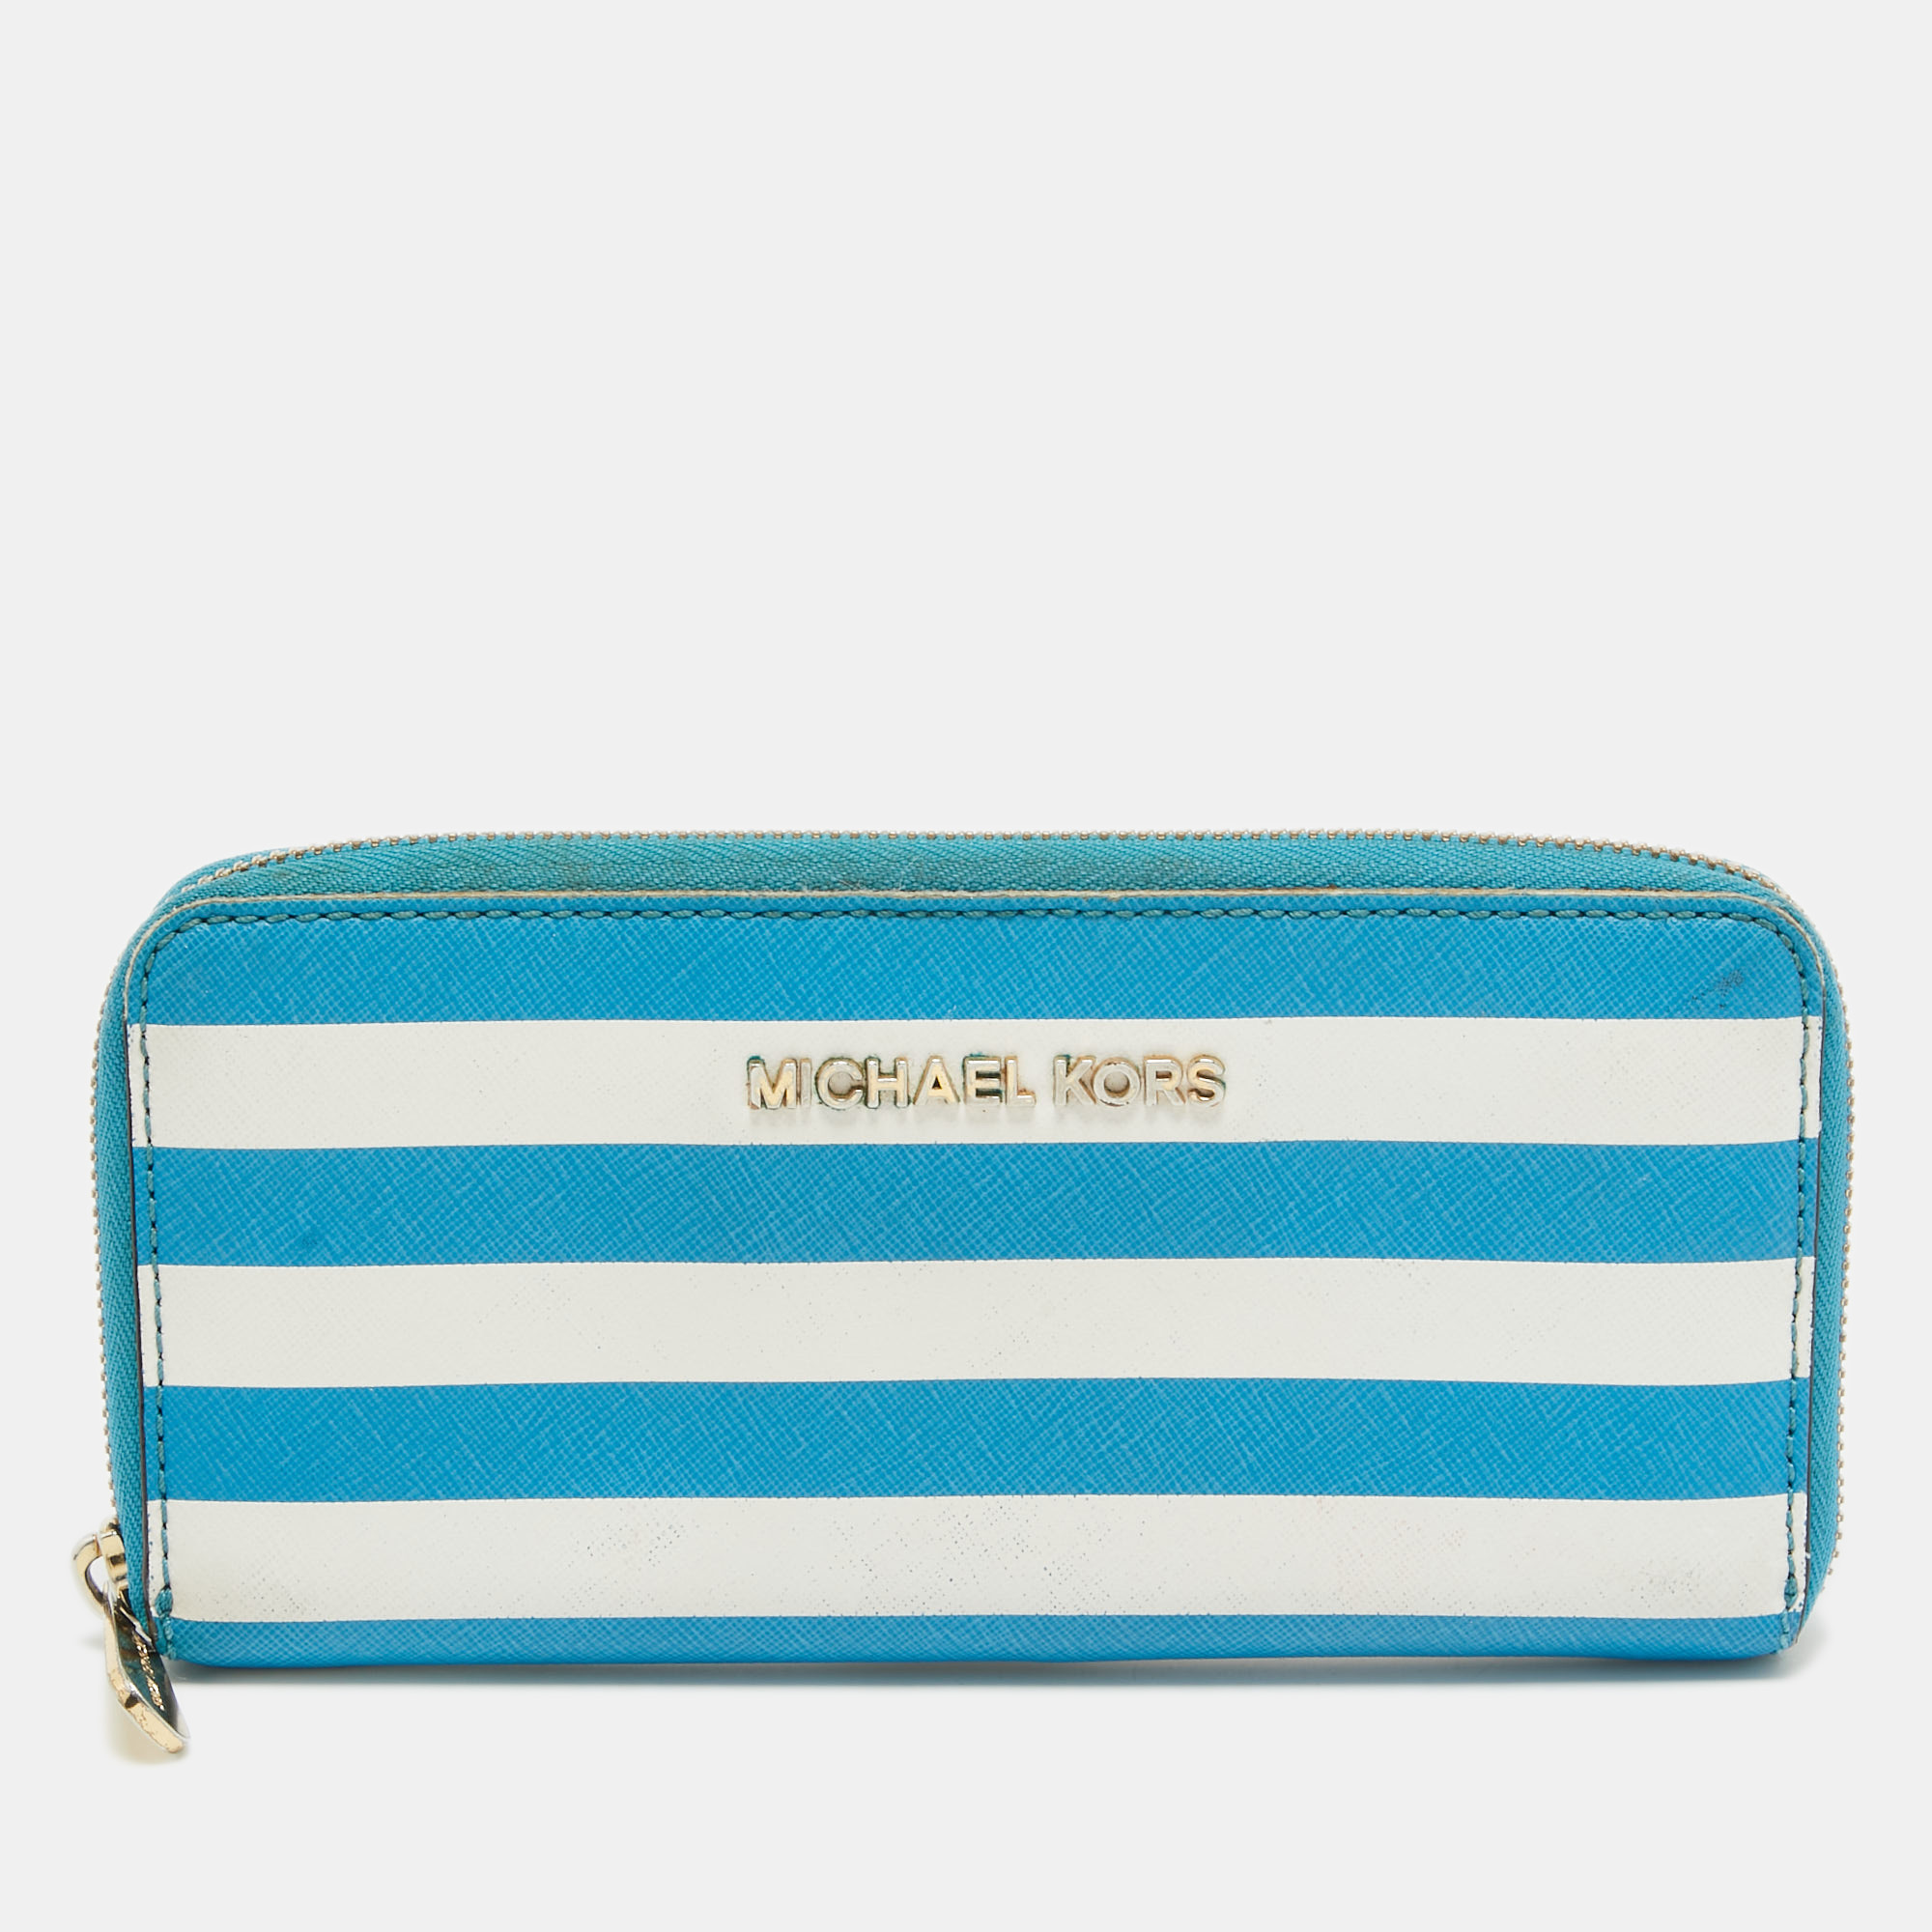 Michael kors blue/white stripe leather zip around continental wallet